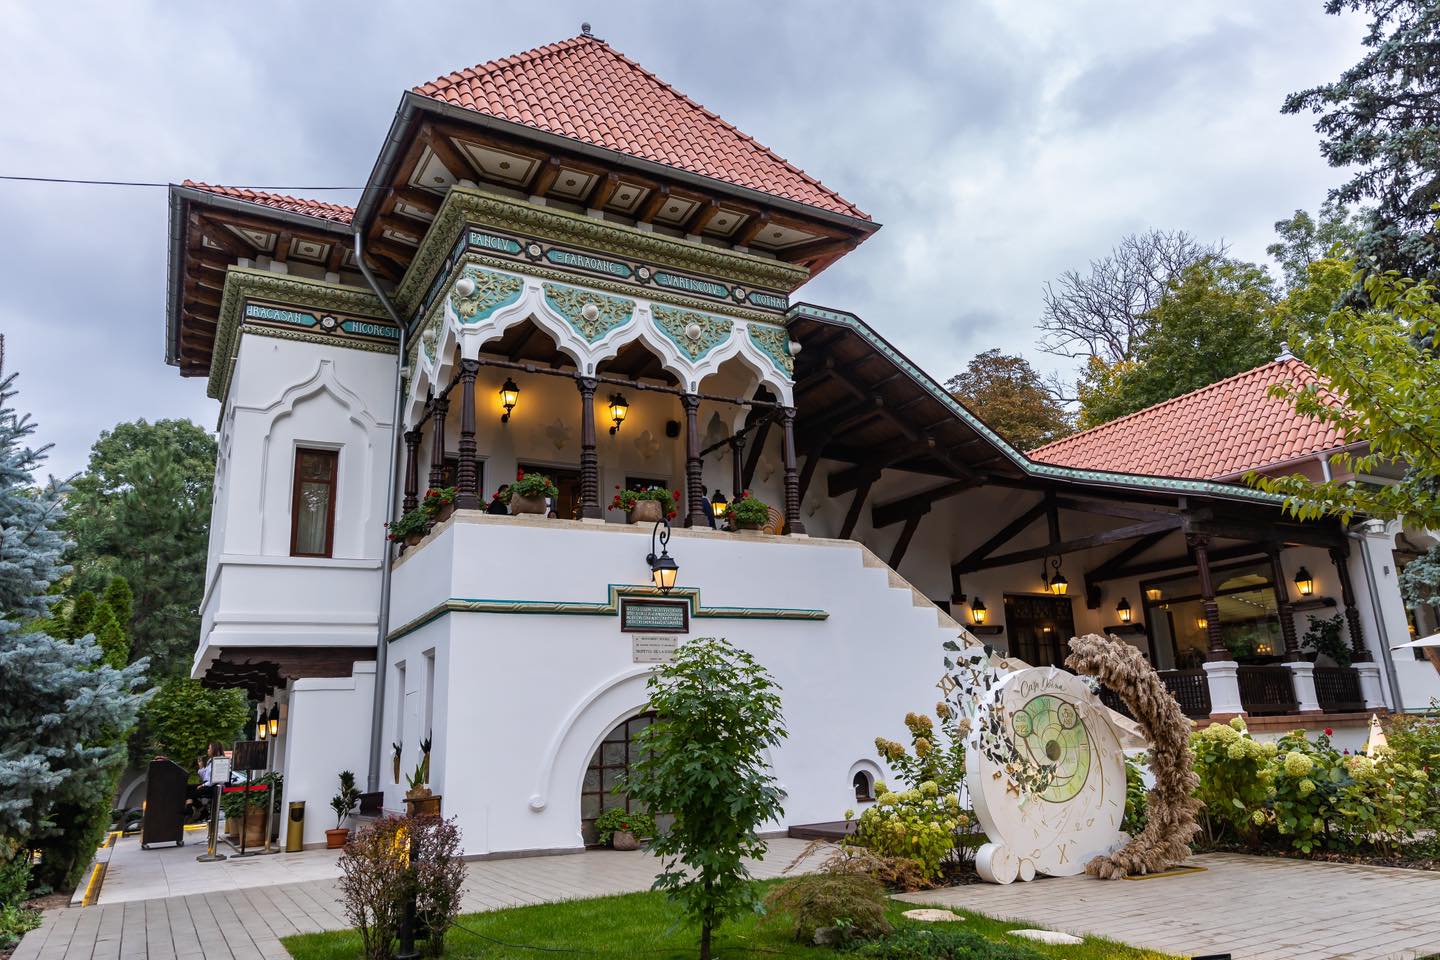 restaurant Casa Doina - imagine de ansamblu a cladirii in stil neo-romanesc